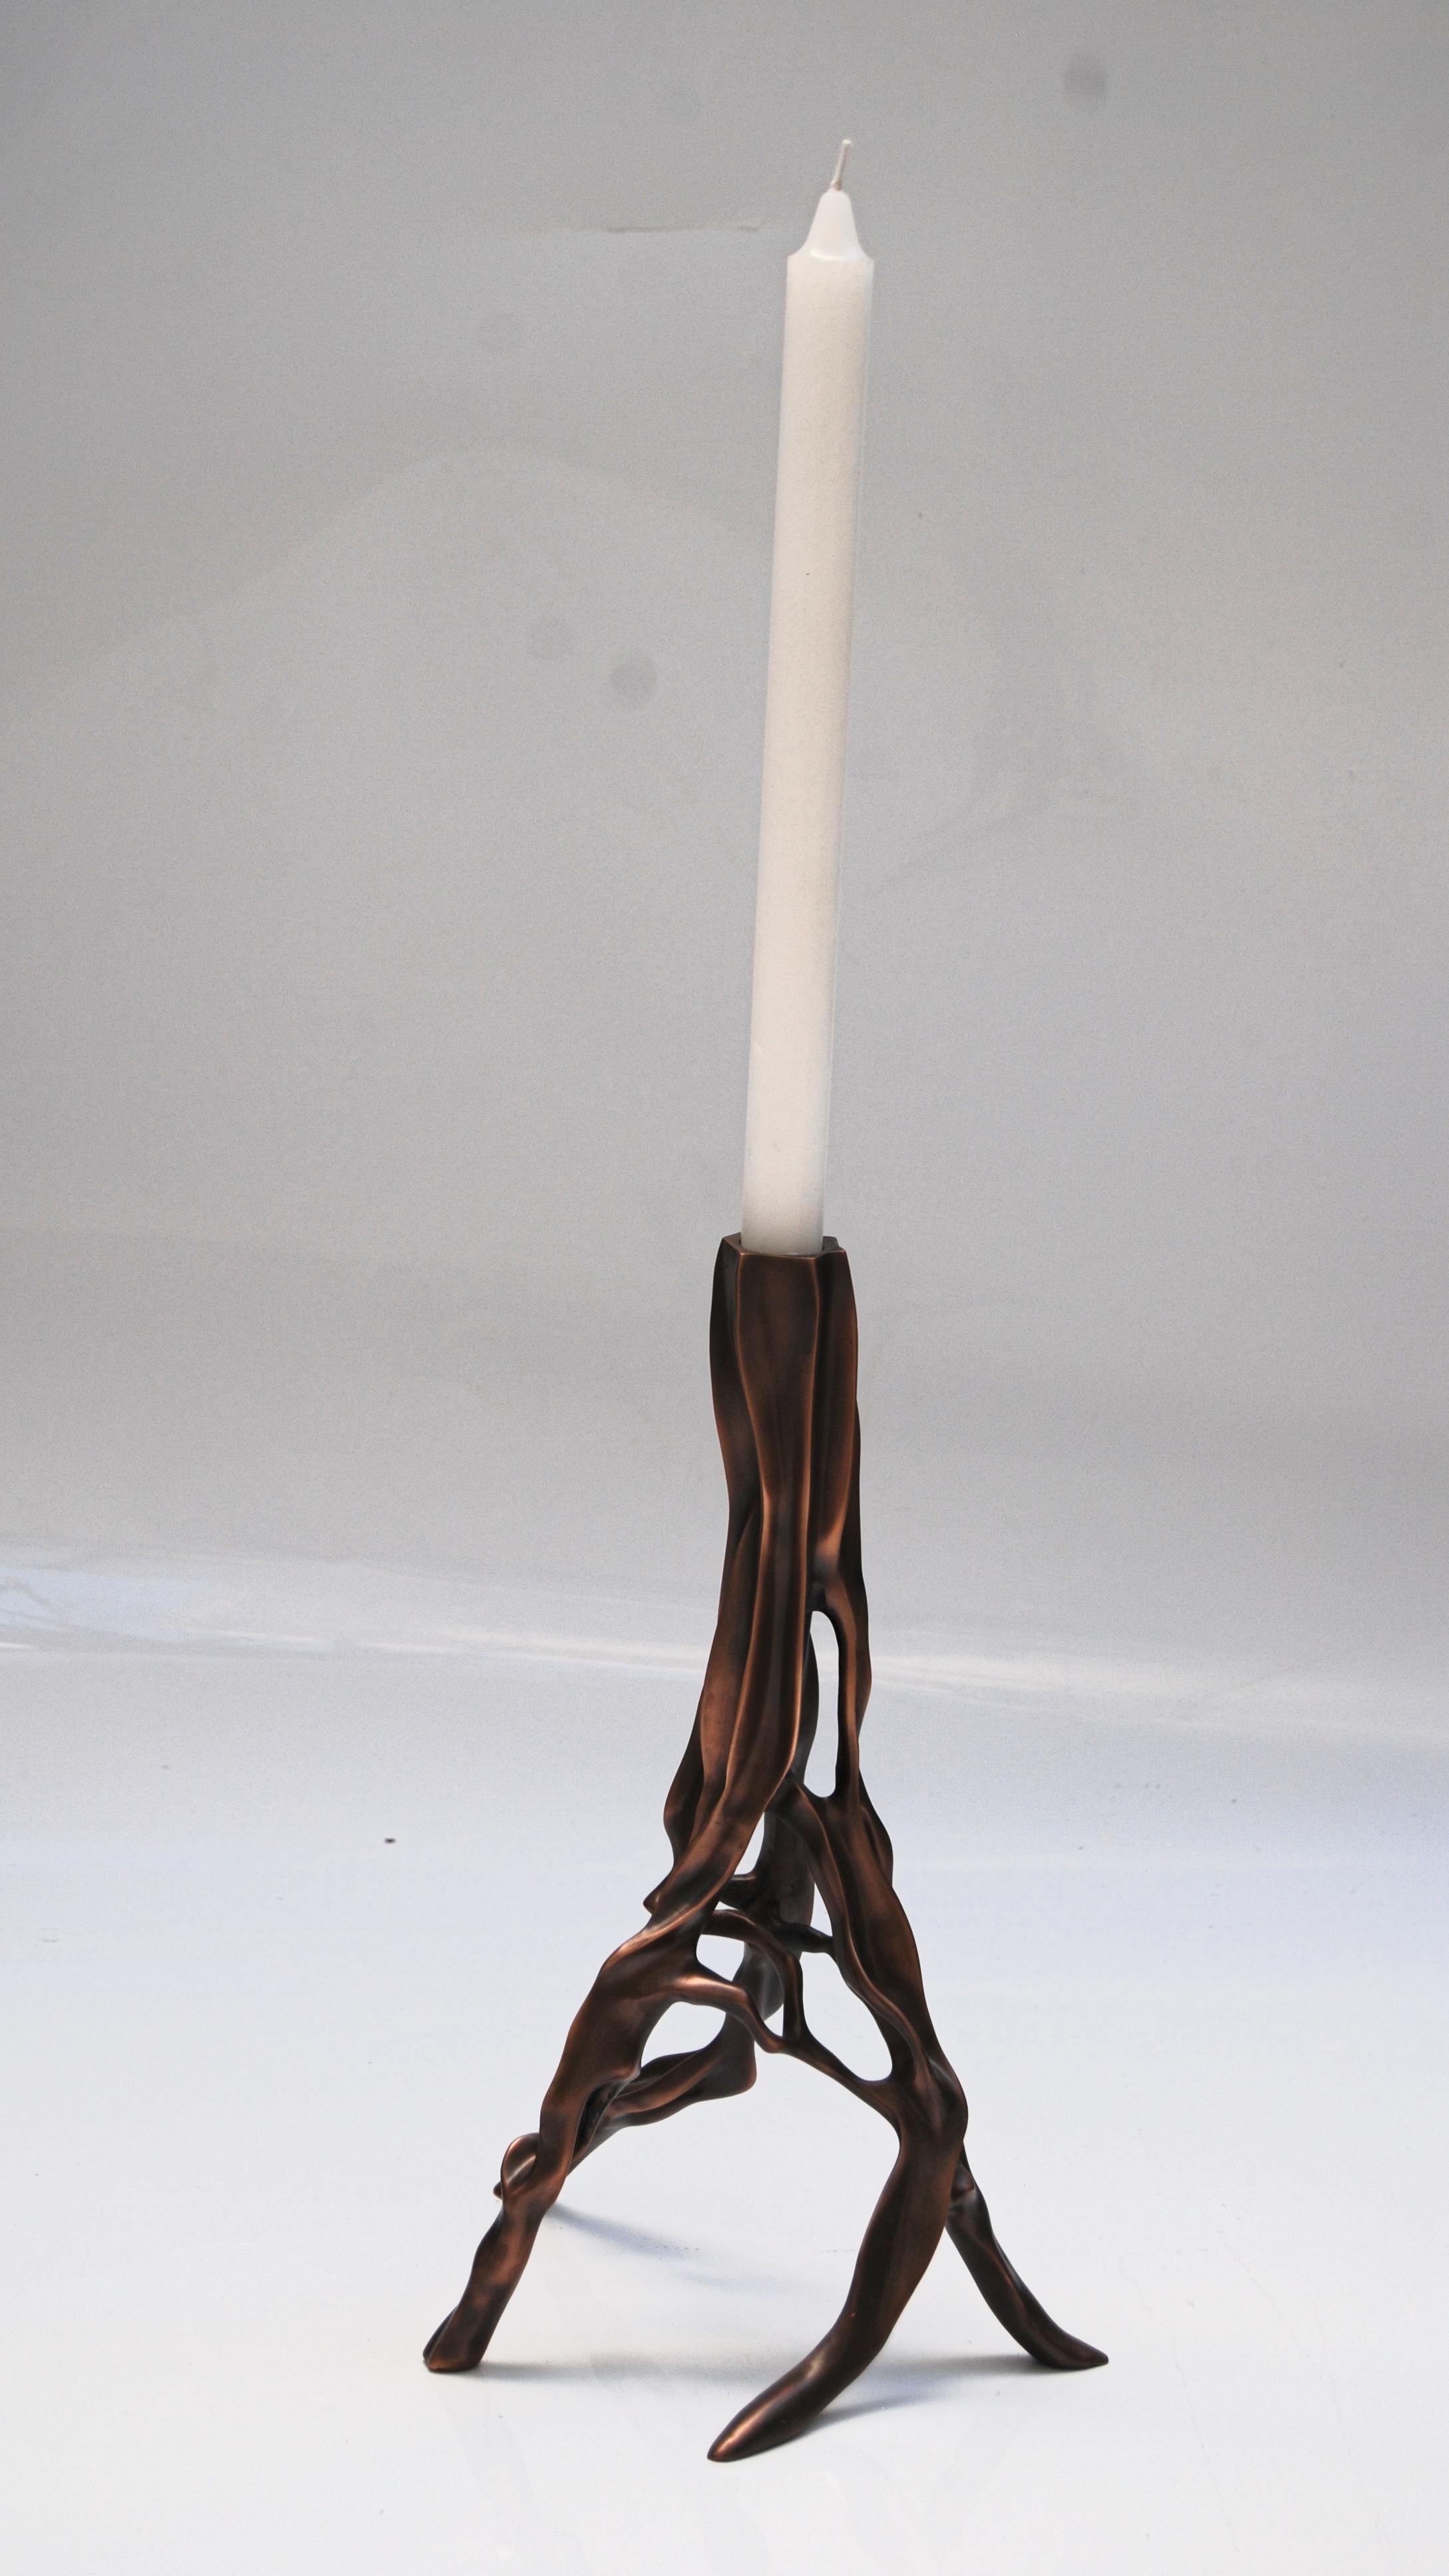 Brazilian Candlestick in Polished Bronze by FAKASAKA Design